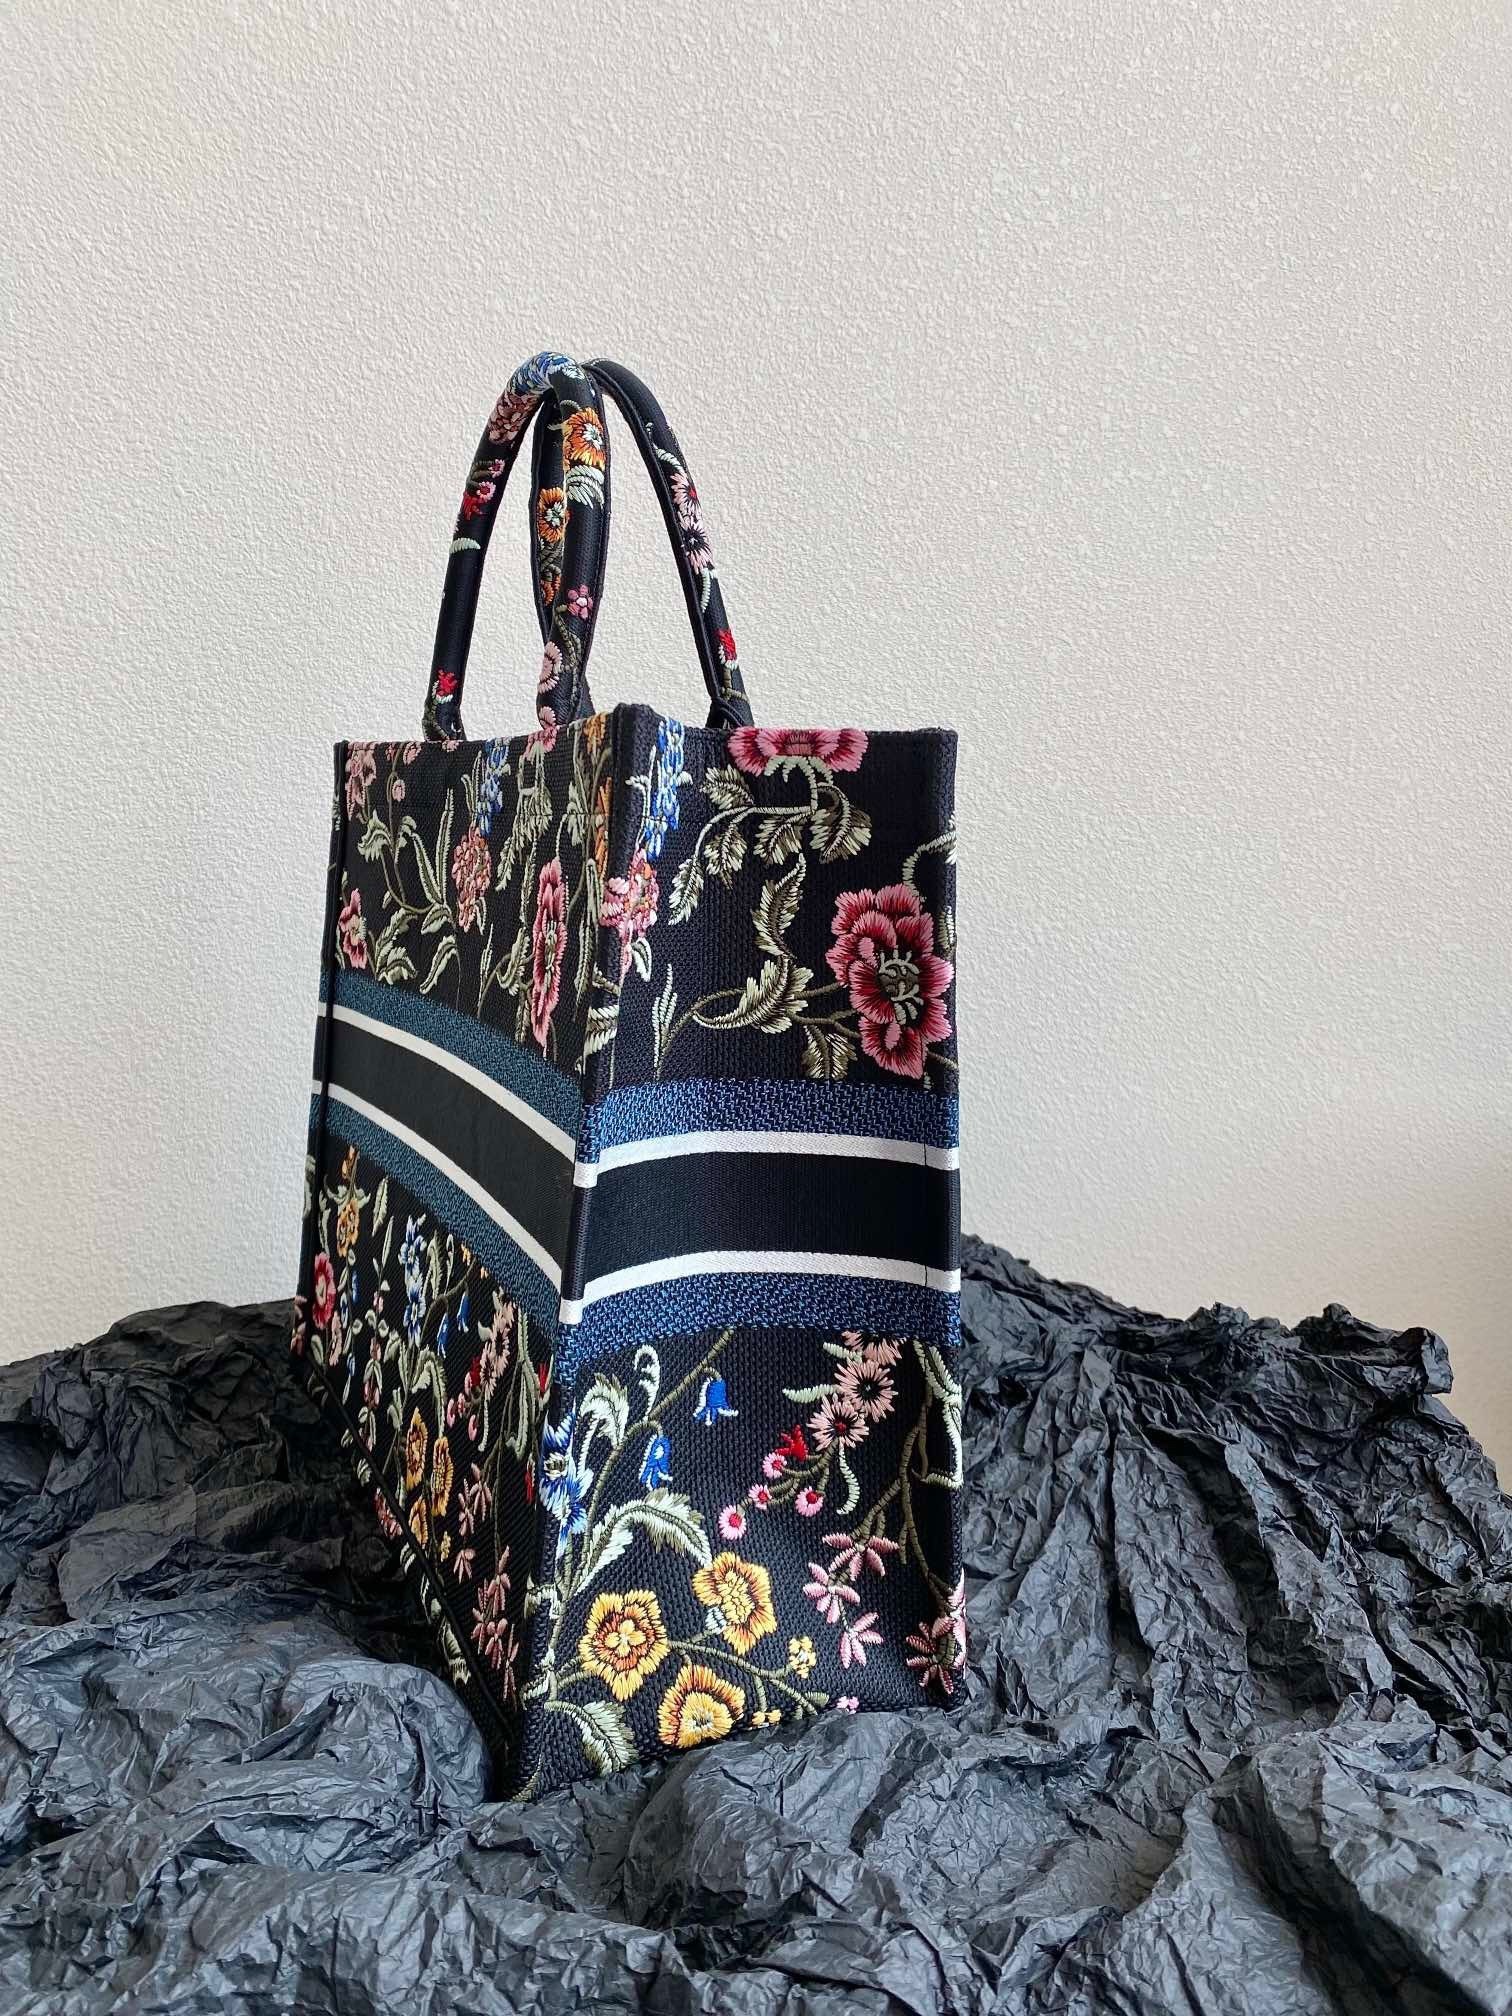 Dior Large Book Tote Bag In Black Dior Petites Fleurs Embroidery 763